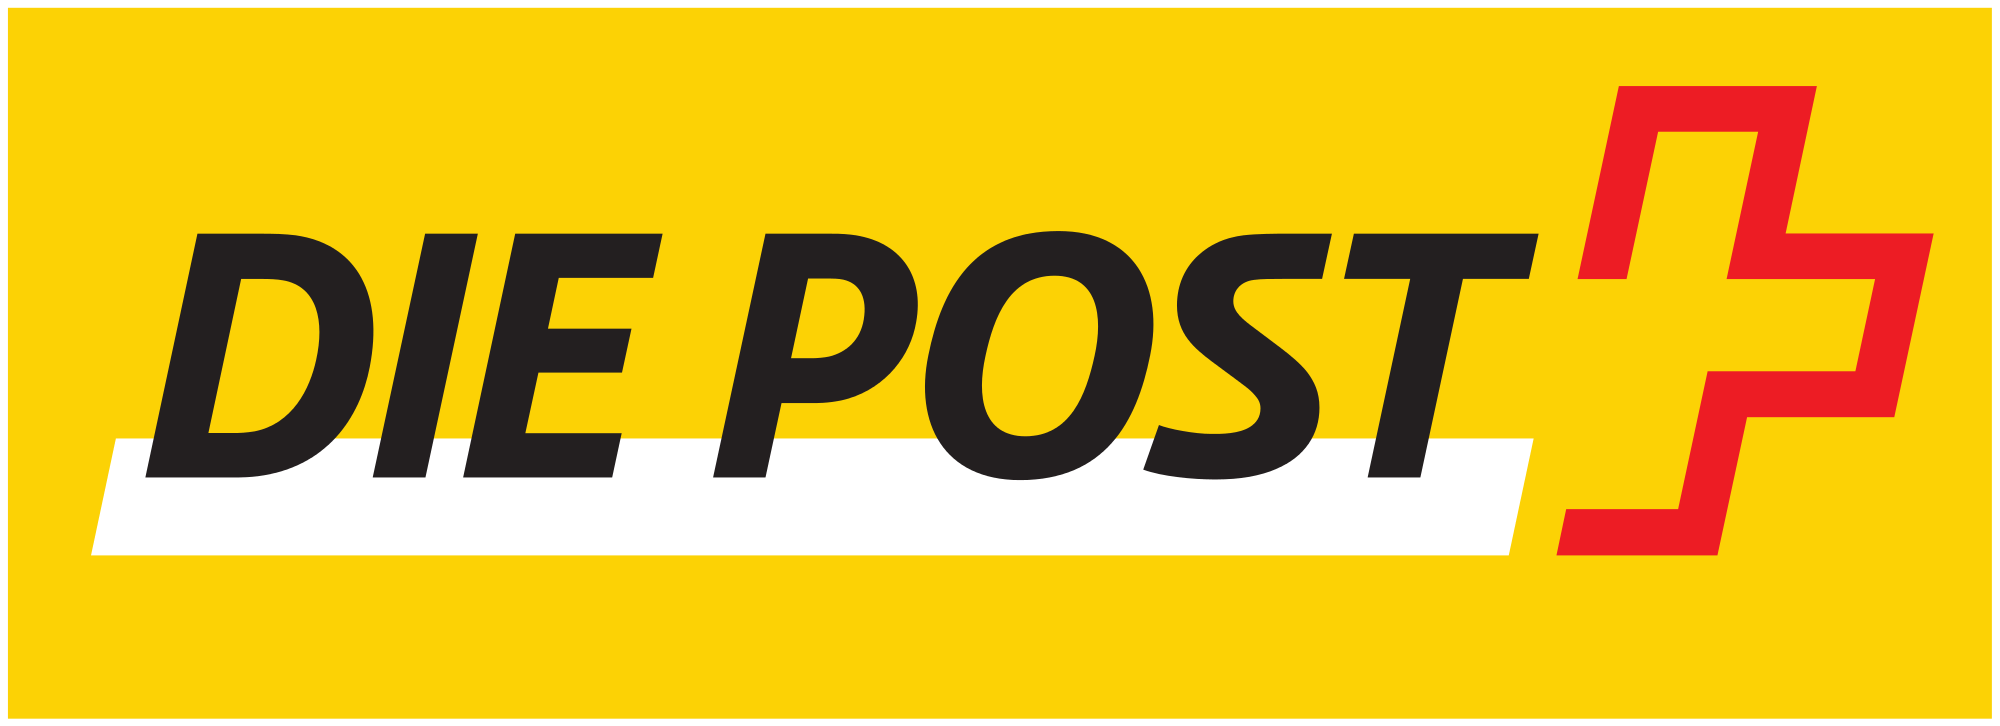 Onlinerabatt bei Paketen 2021 bei der Post